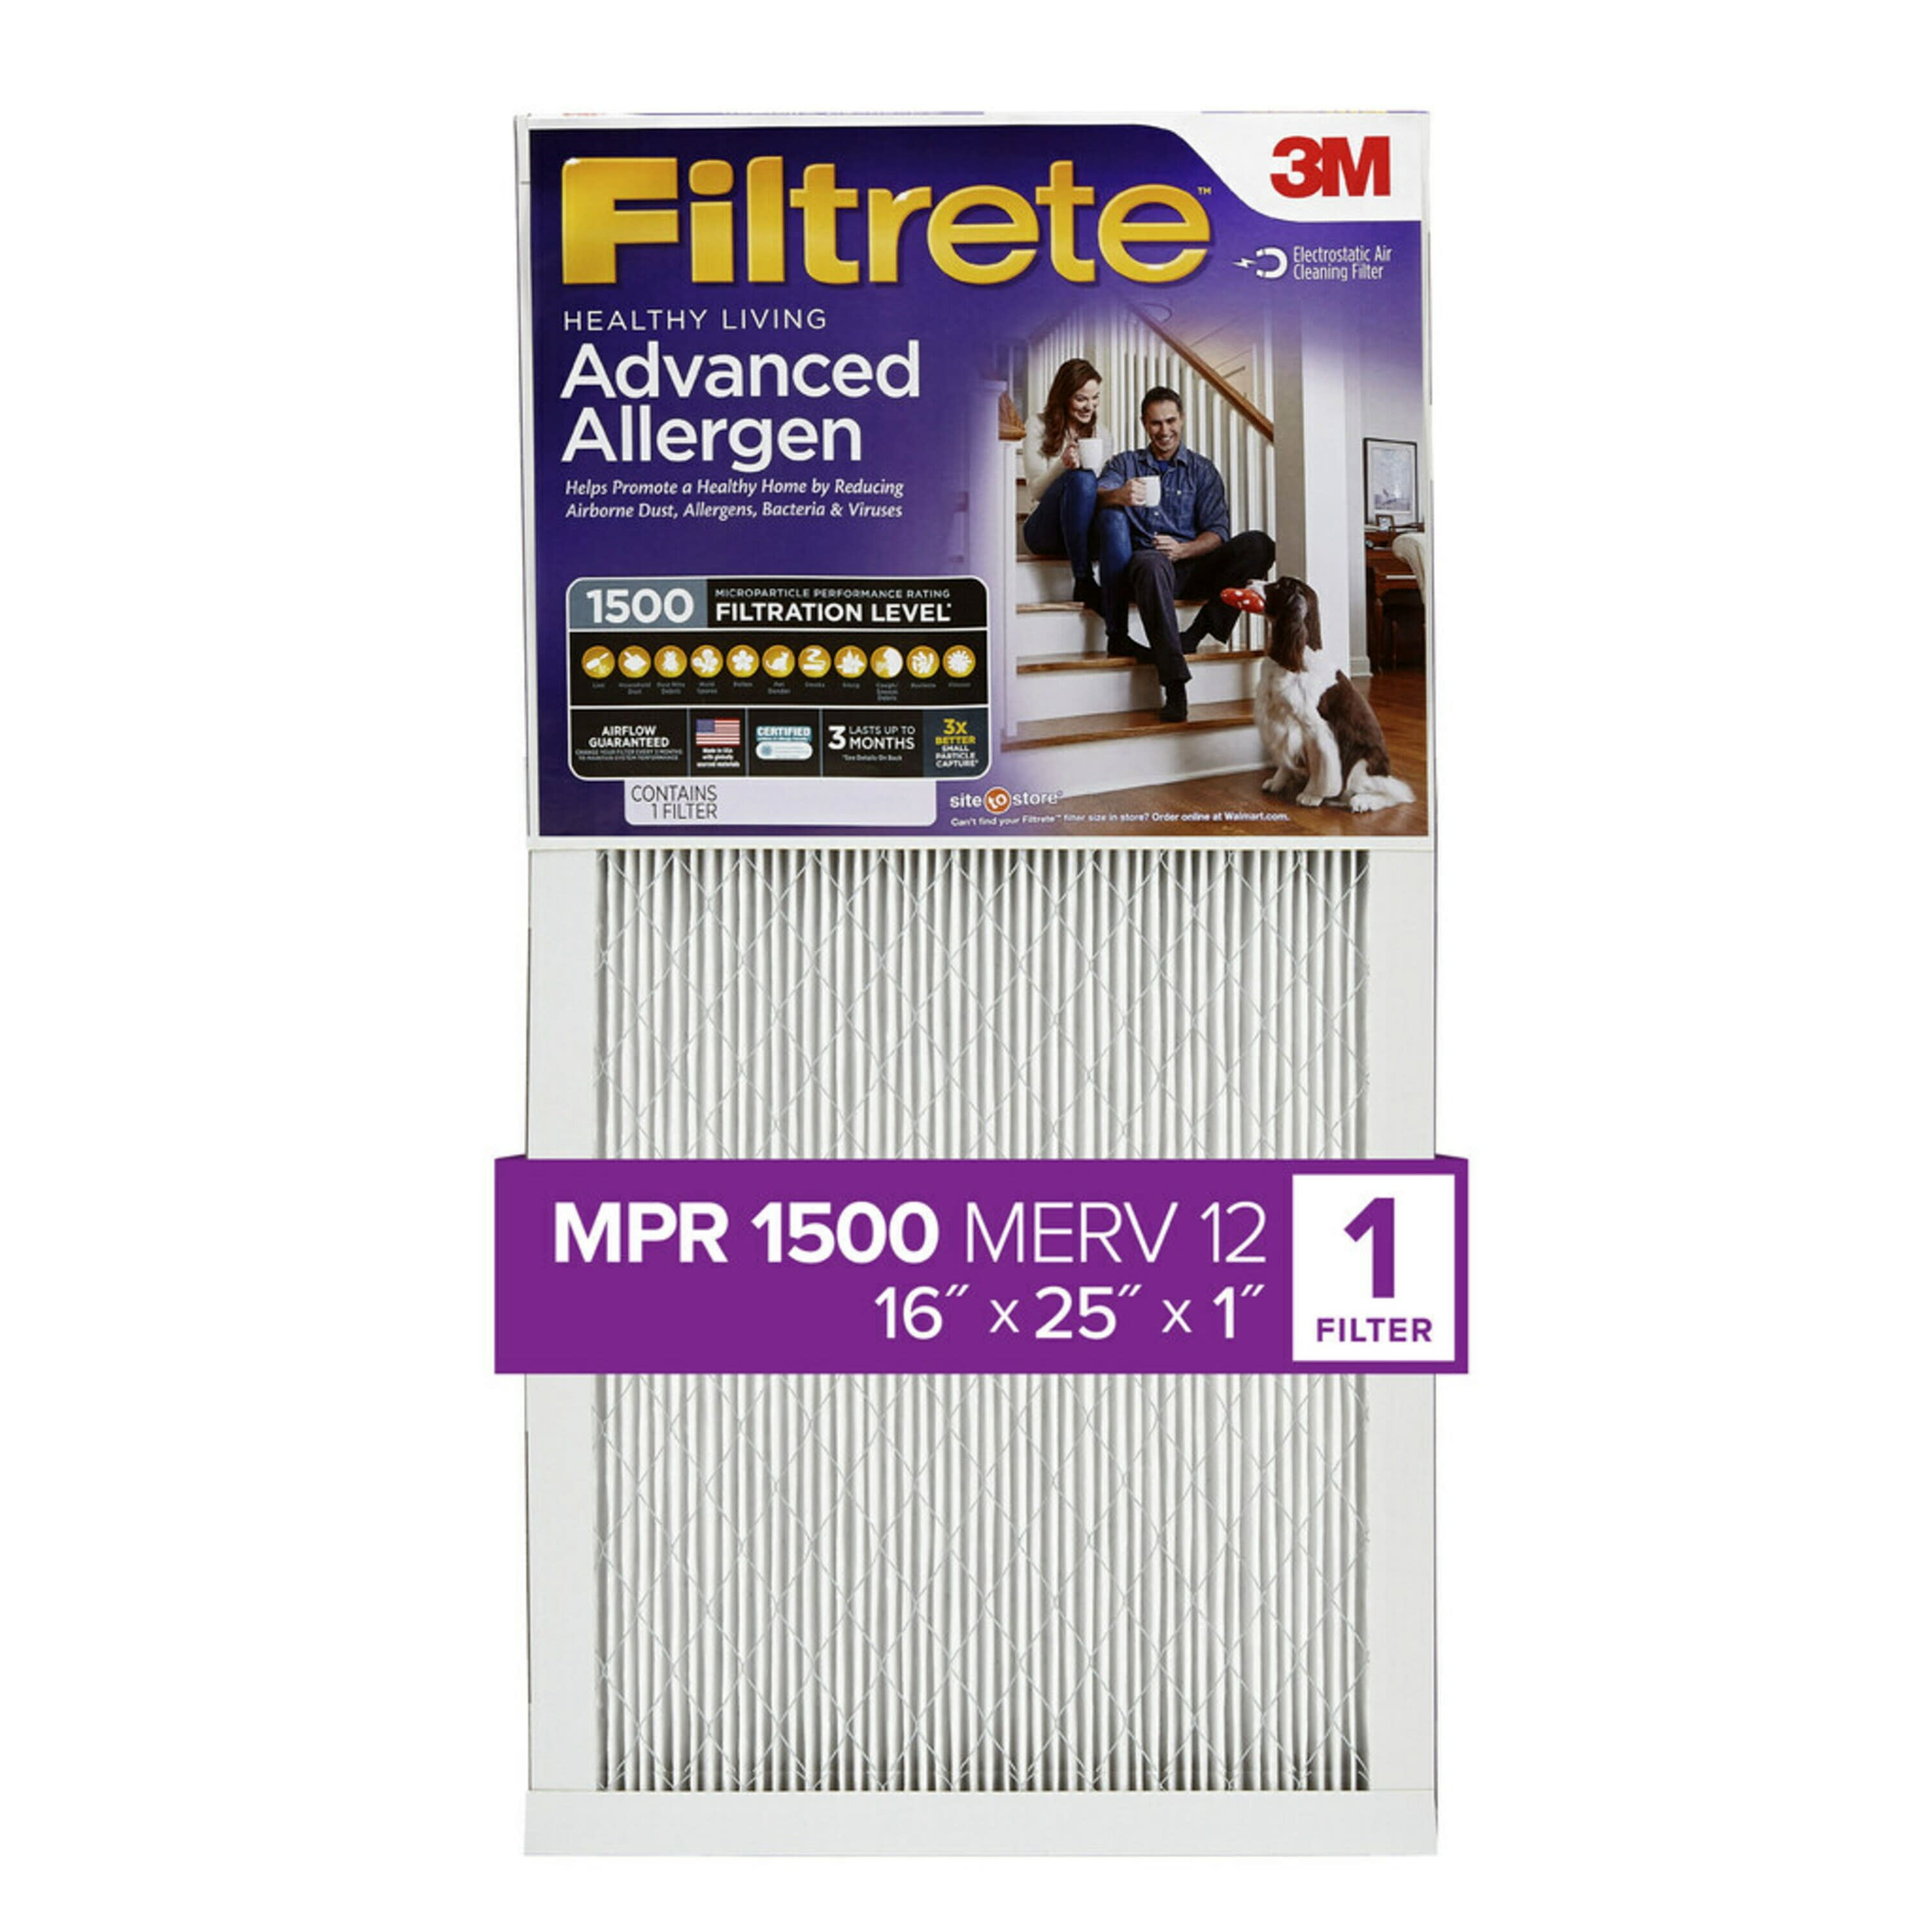 Filtrete by 3M, 16x25x1, MERV 12, Advanced Allergen Reduction HVAC Furnace Air Filter, Captures Allergens, Bacteria, Viruses, 1500 MPR, 1 Filter